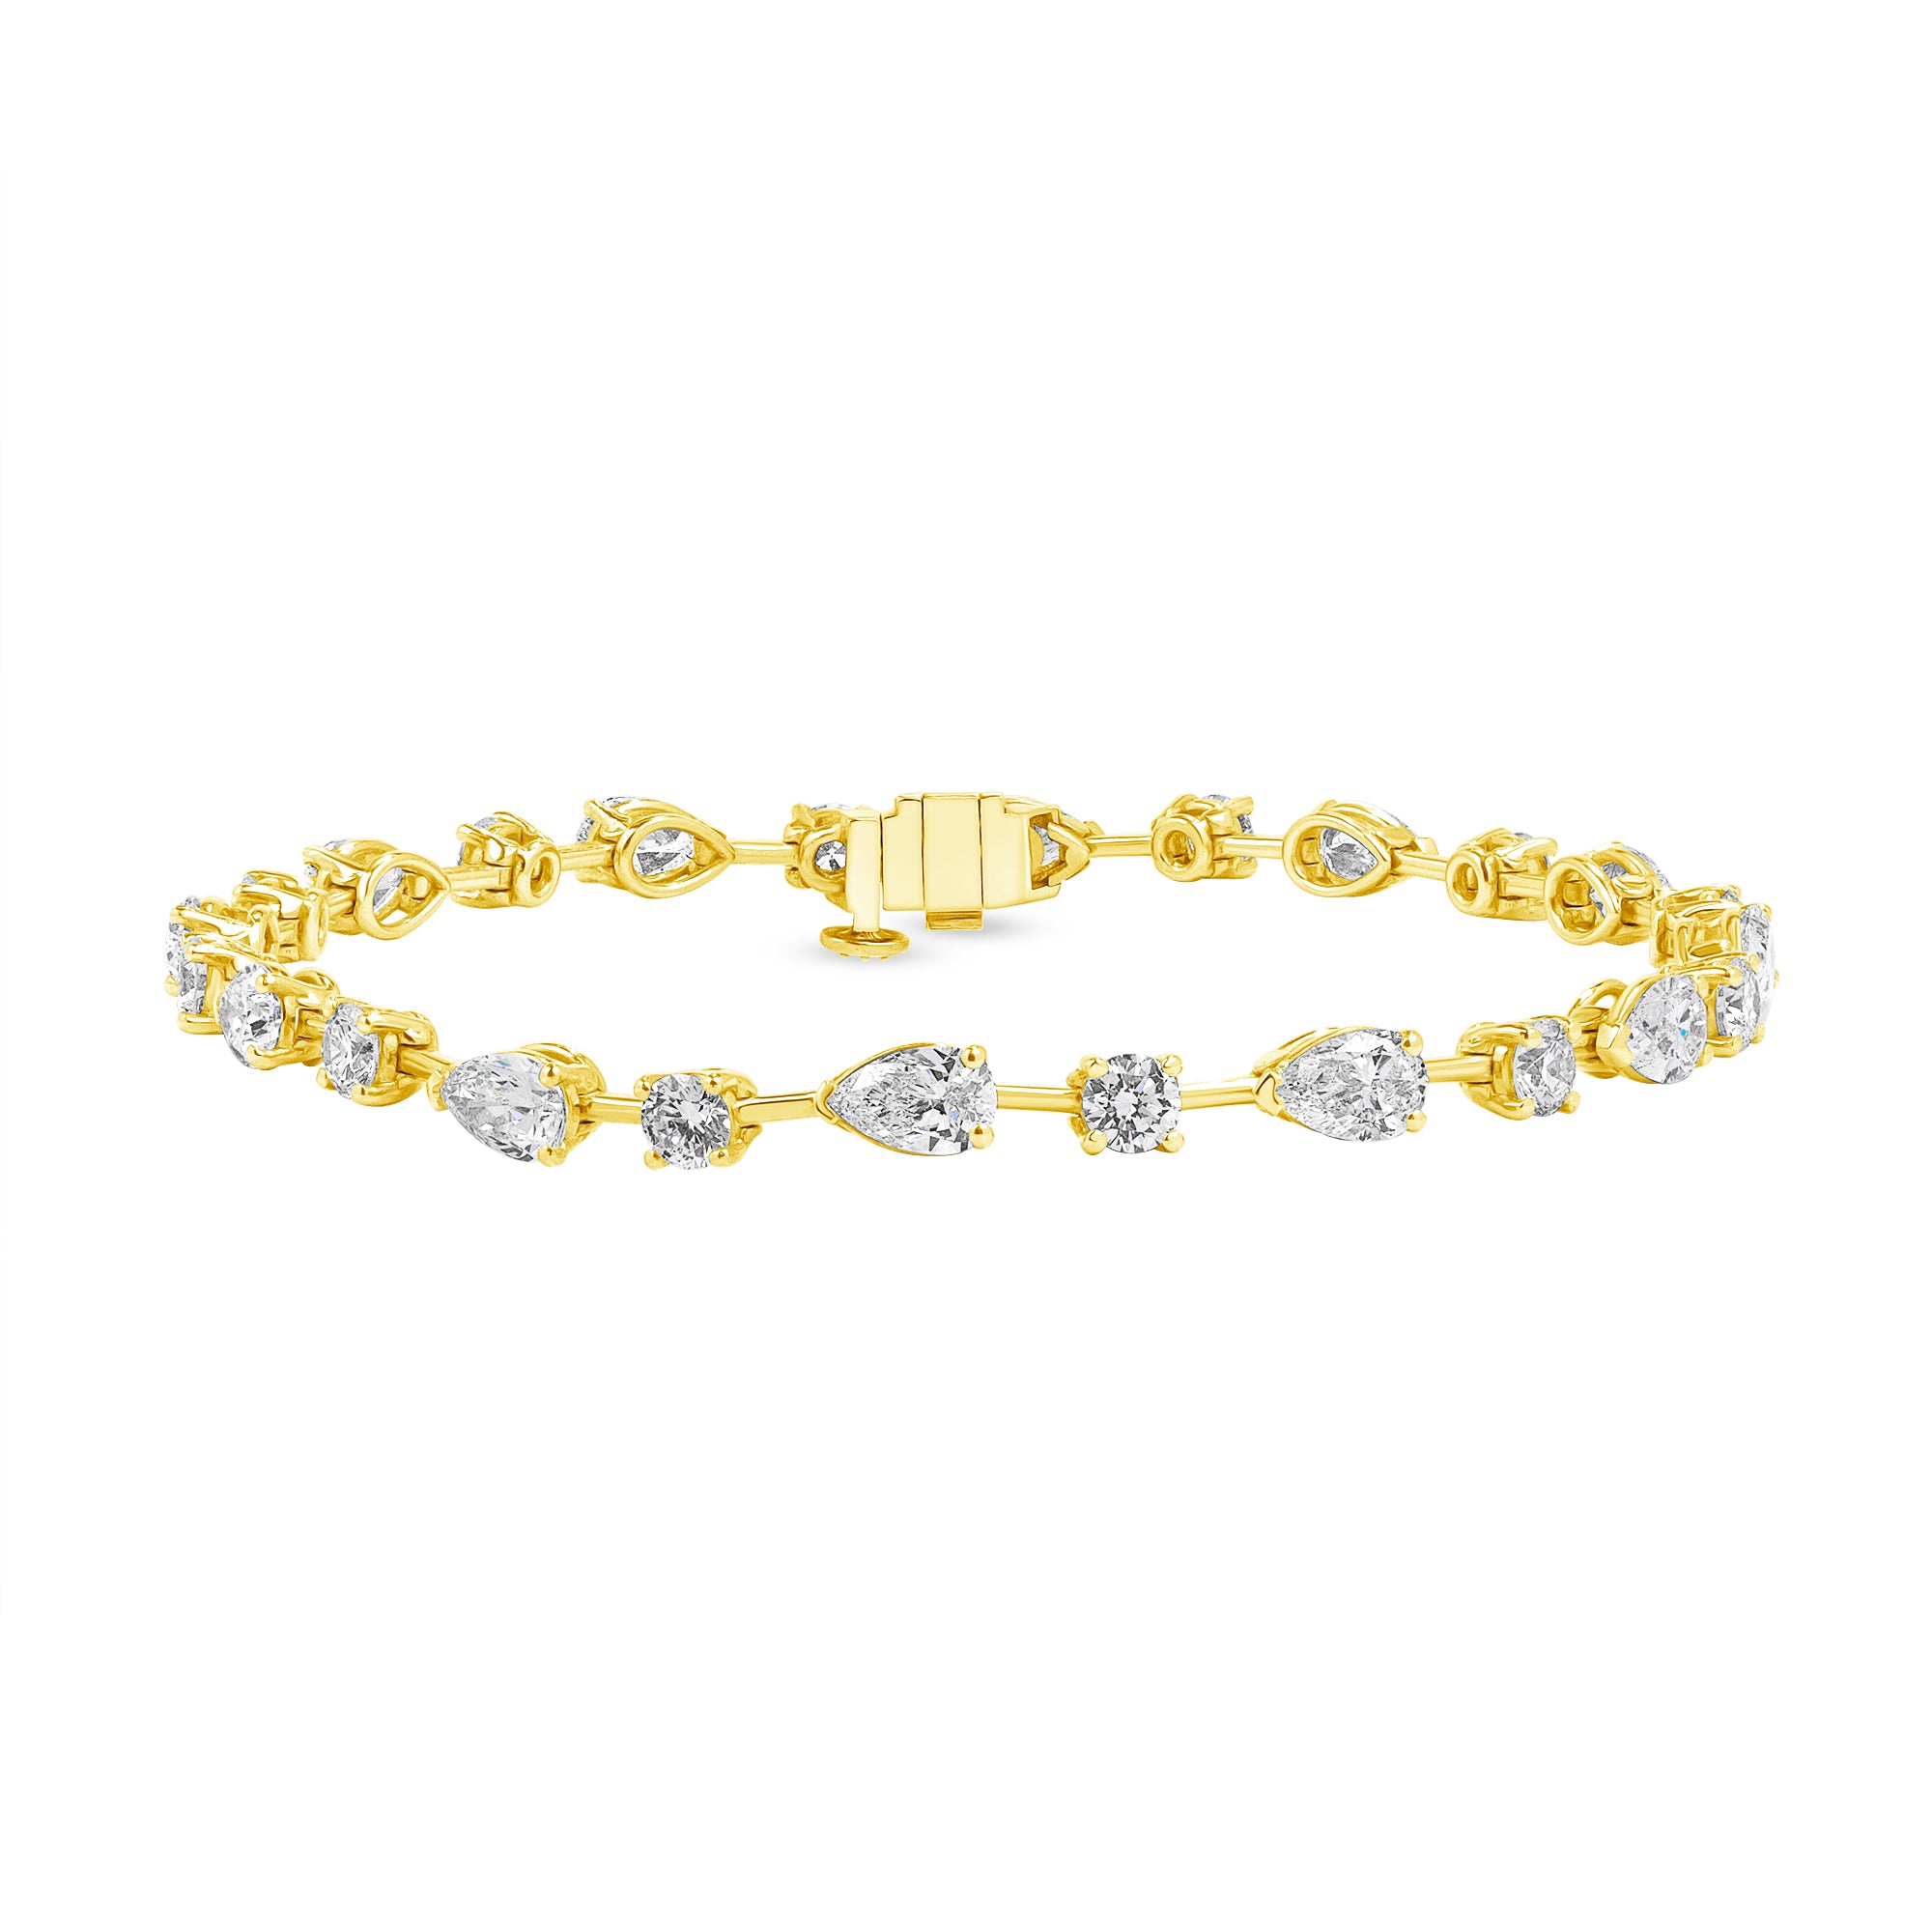 5.84ctw Alternating Pear and Round Brilliant Cut Diamond Tennis Bracelet in 18K Yellow Gold